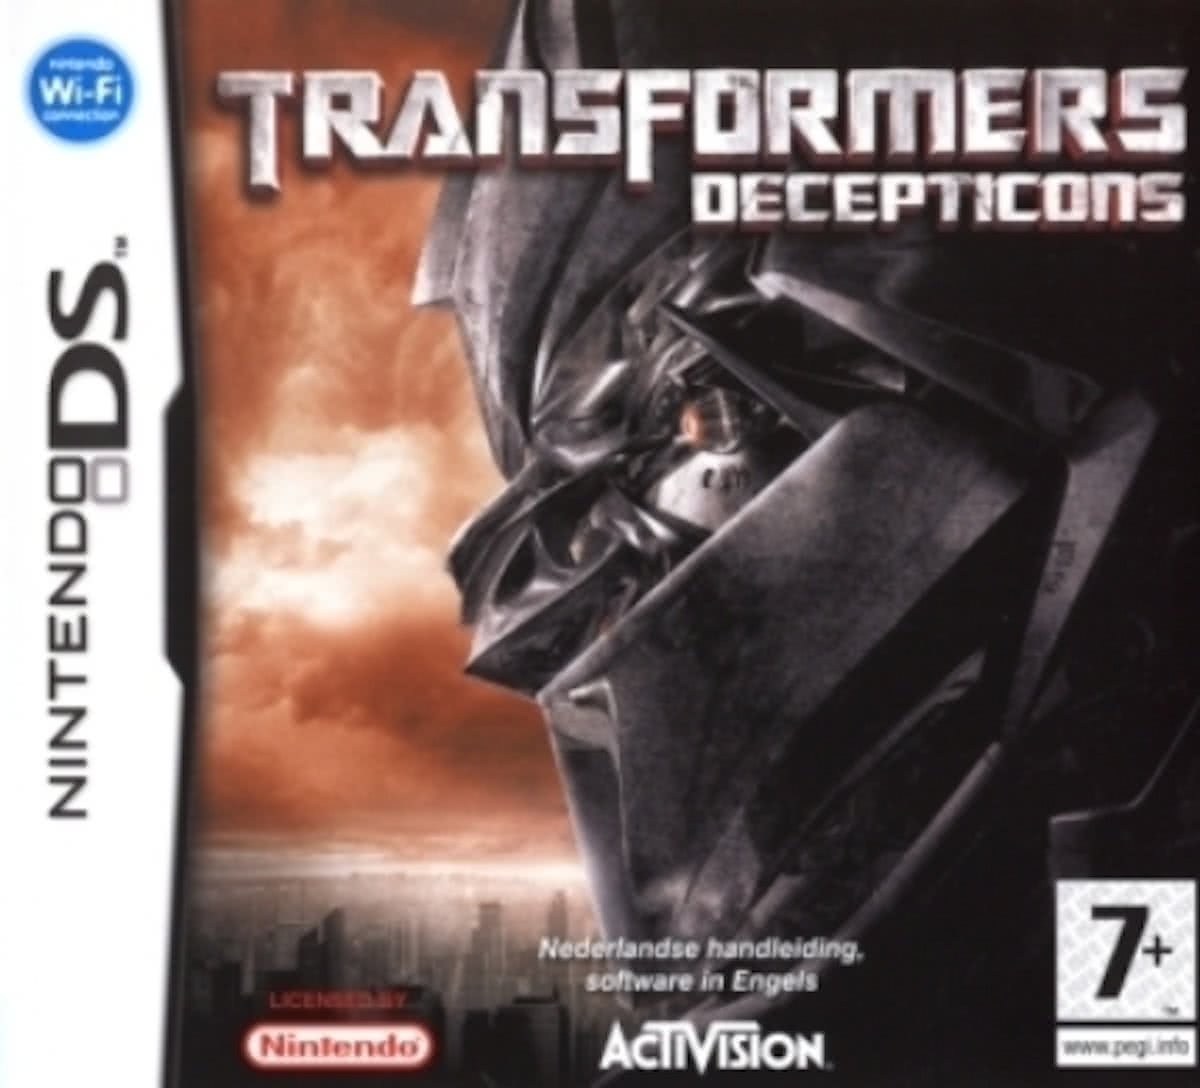 Transformers: Decepticons